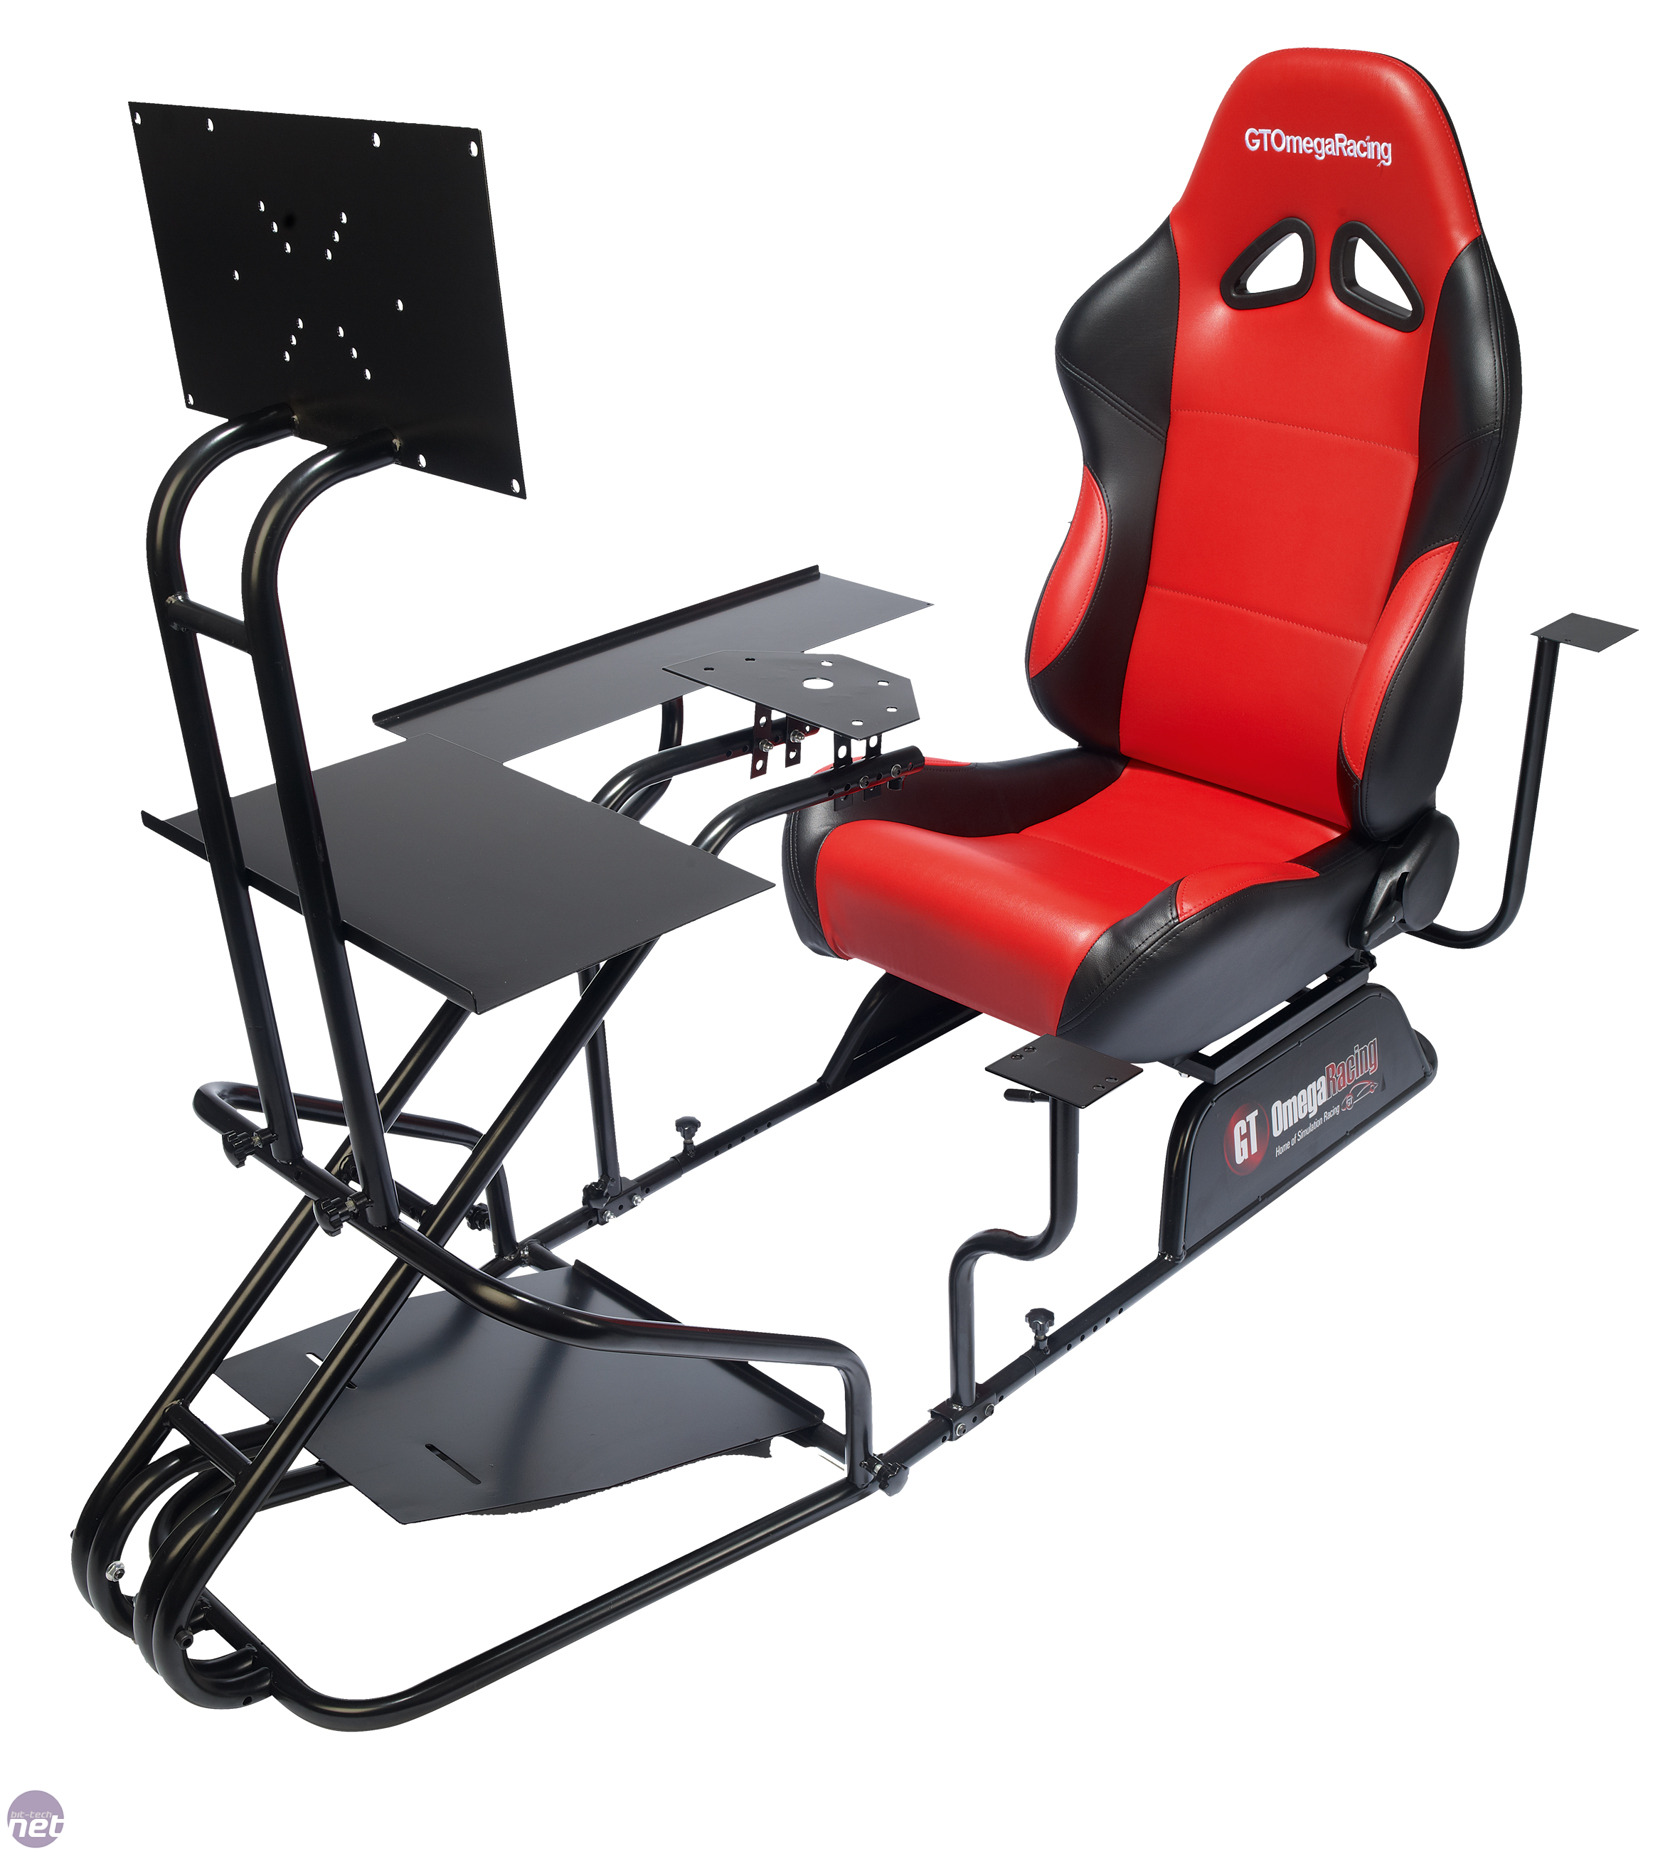 gaming chair omega racing